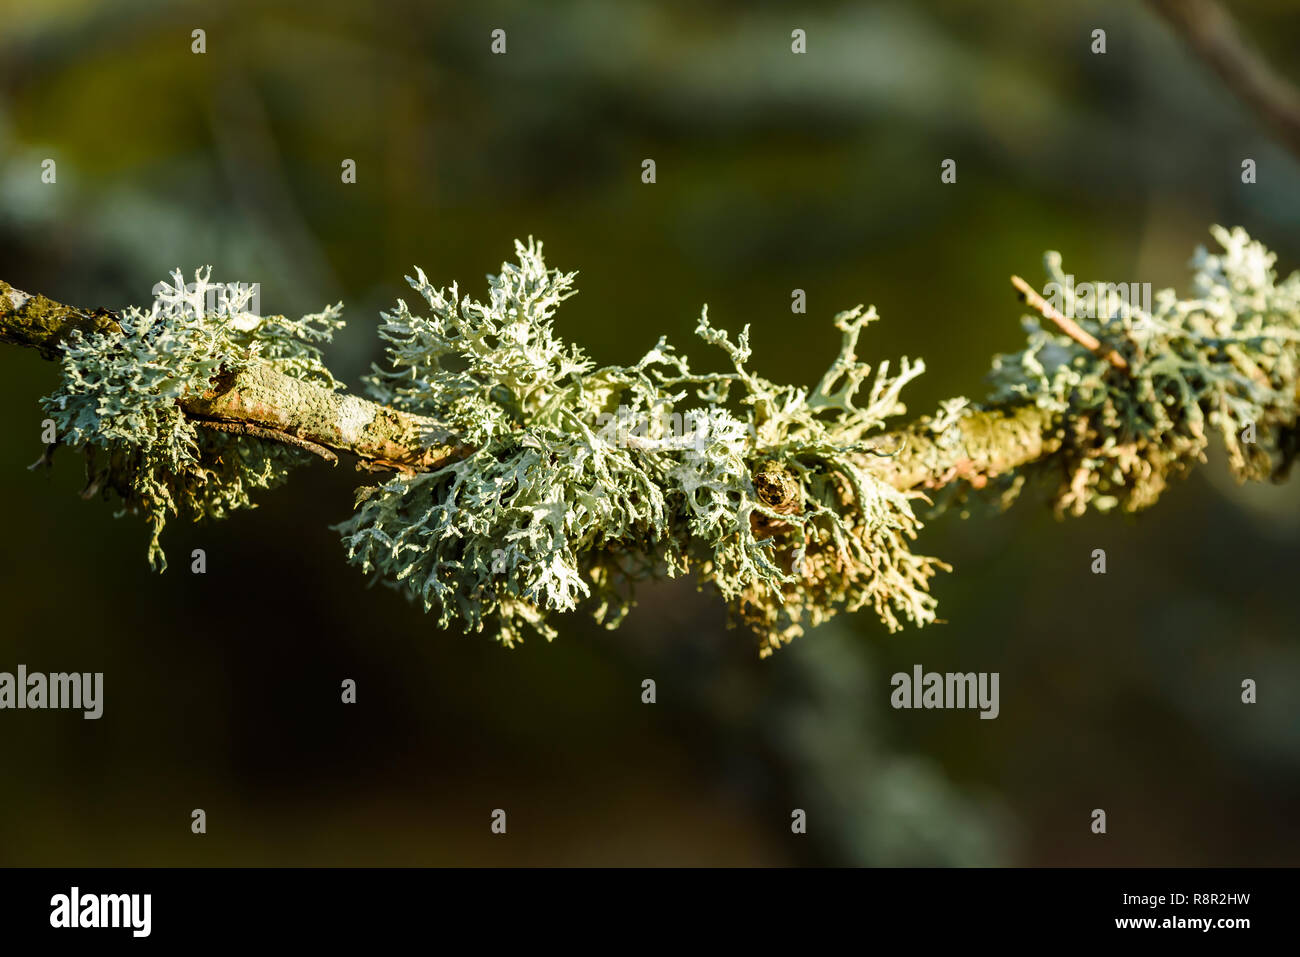 Lichen Evernia prunastri or oakmoss, here on an oak branch. Stock Photo